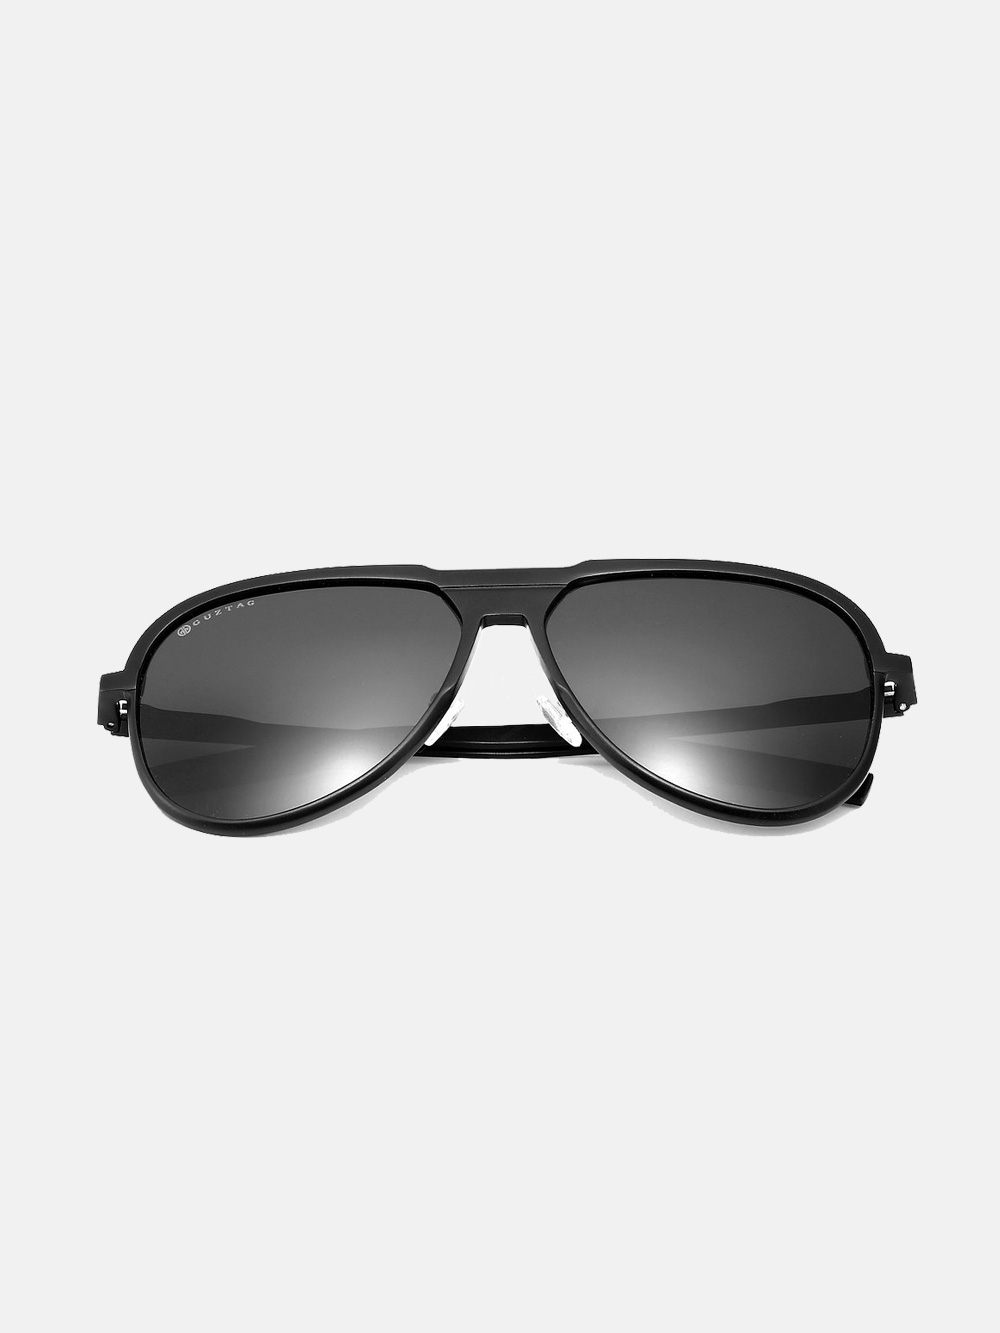 EnChroma Atlas Sunglasses - Color Blind Glasses